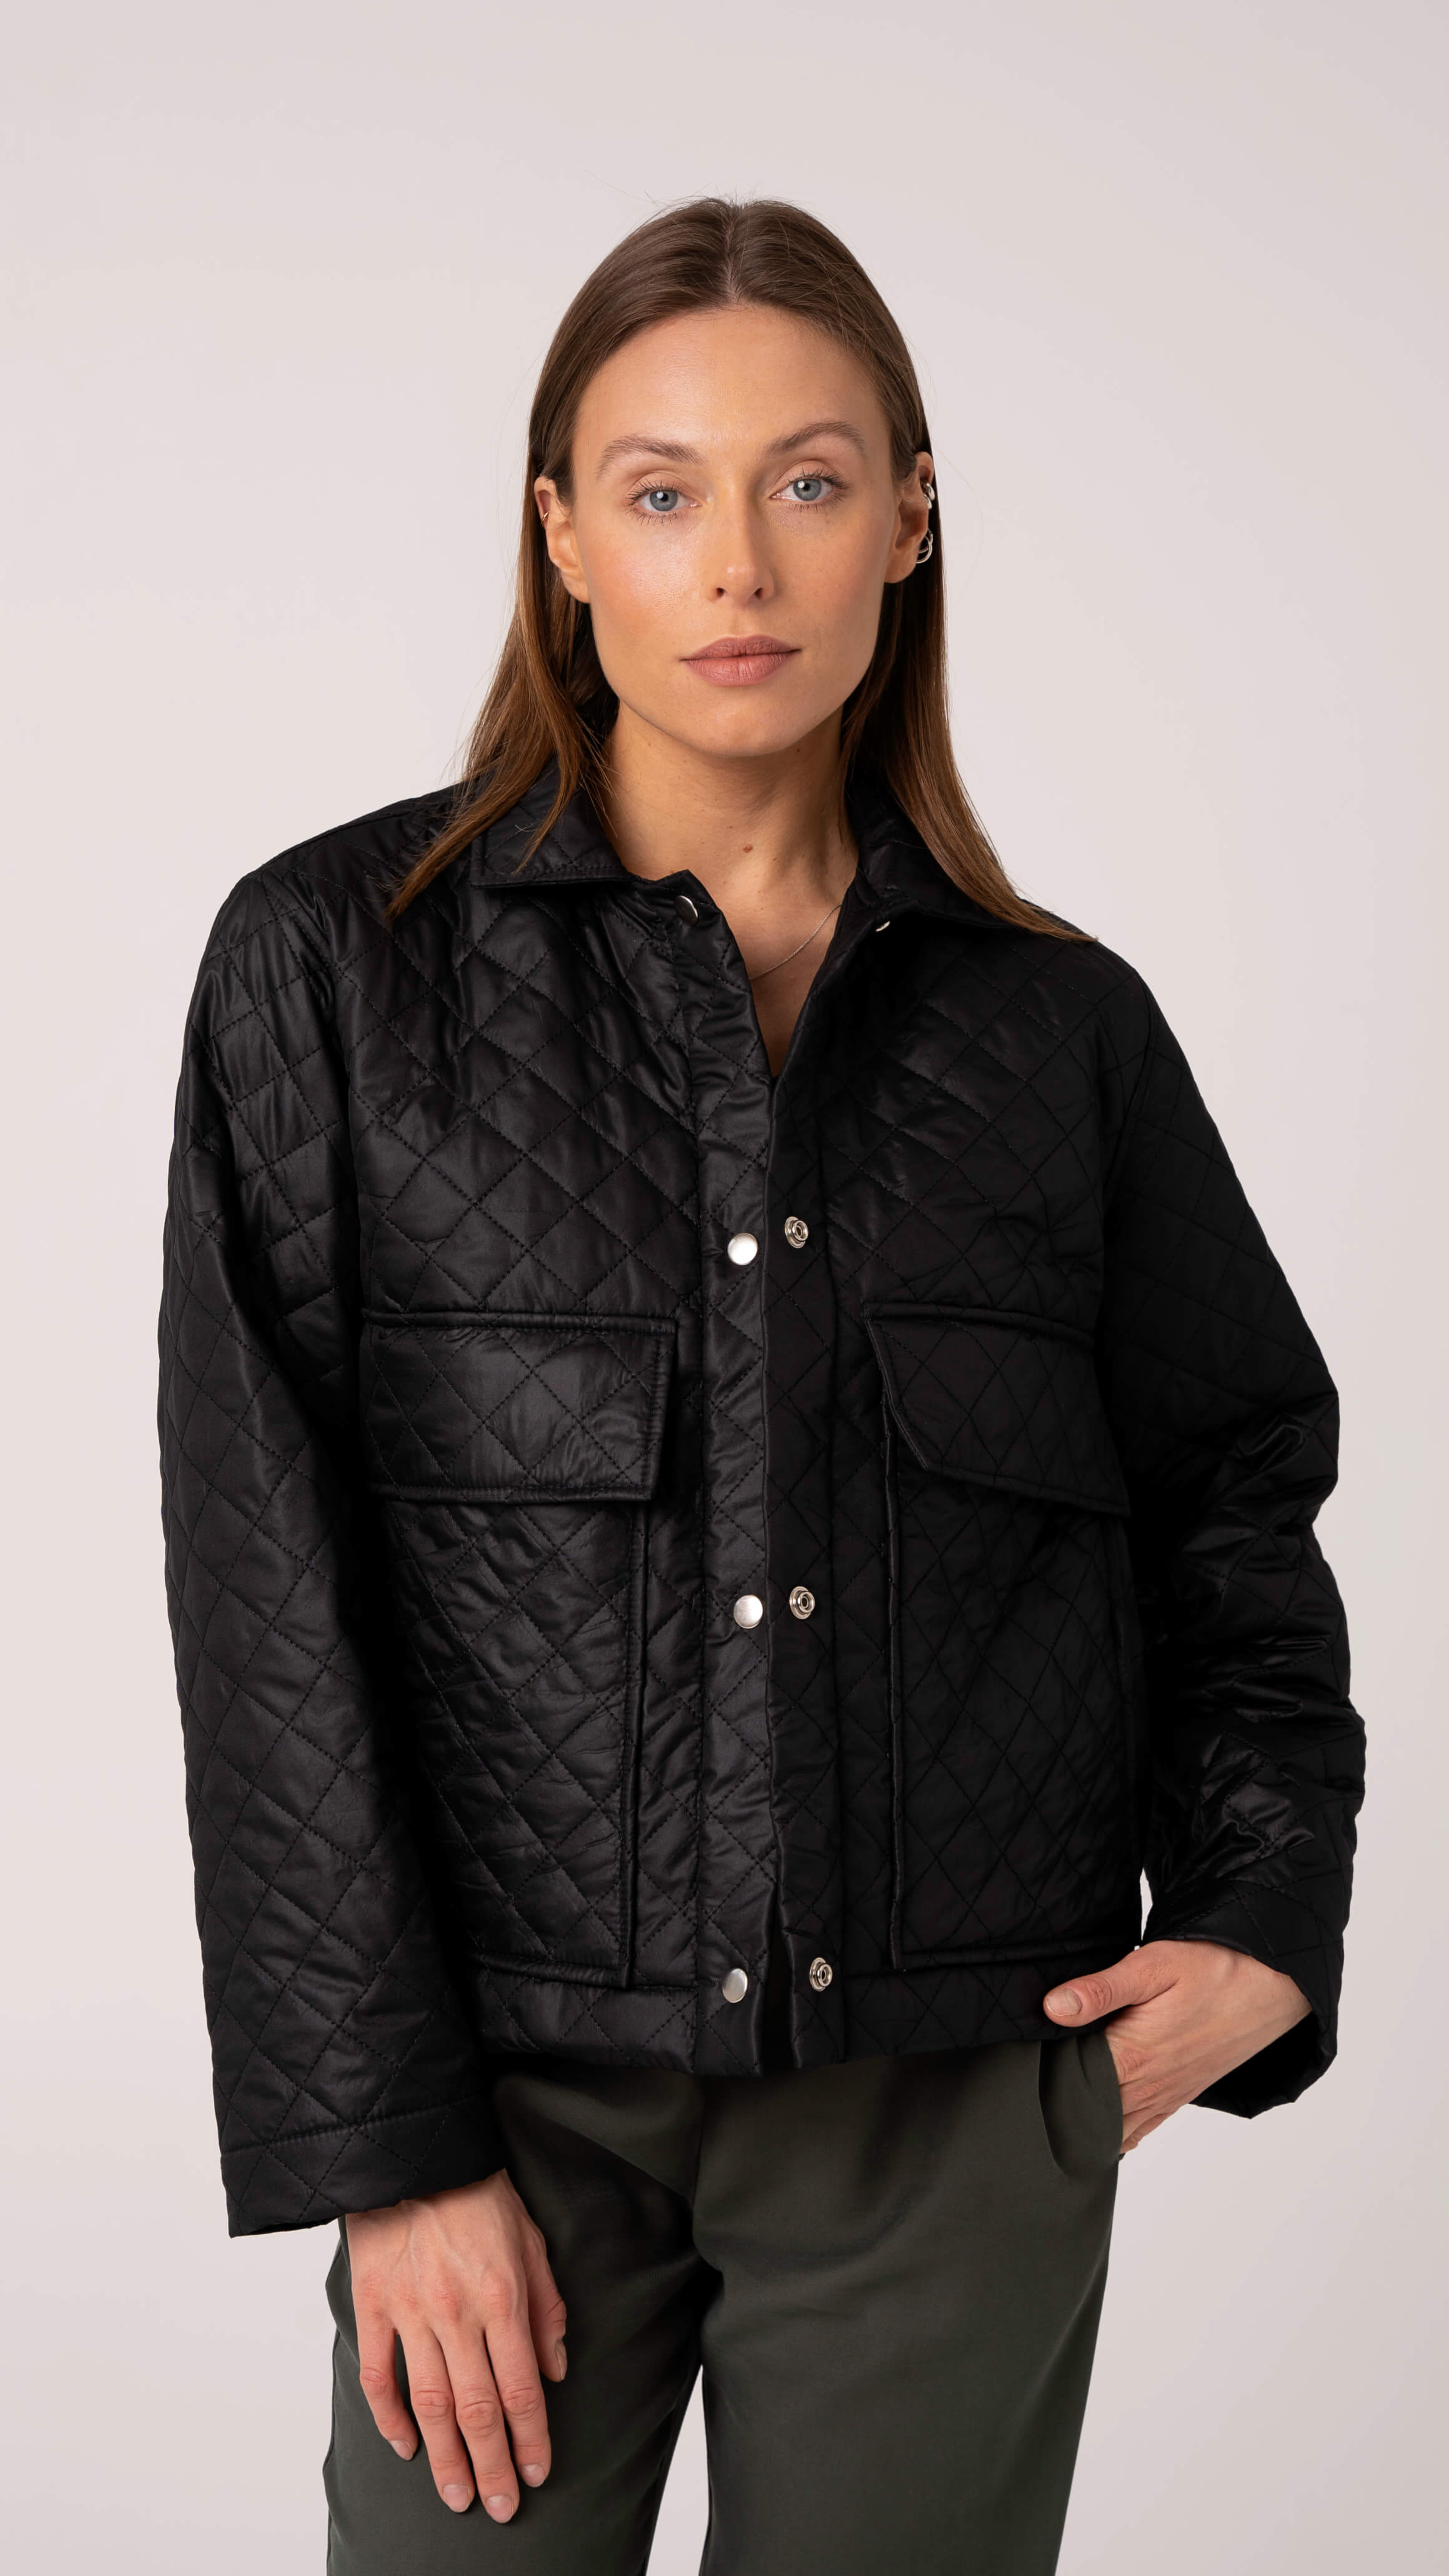 Women's jacket "Ruta" CMF343